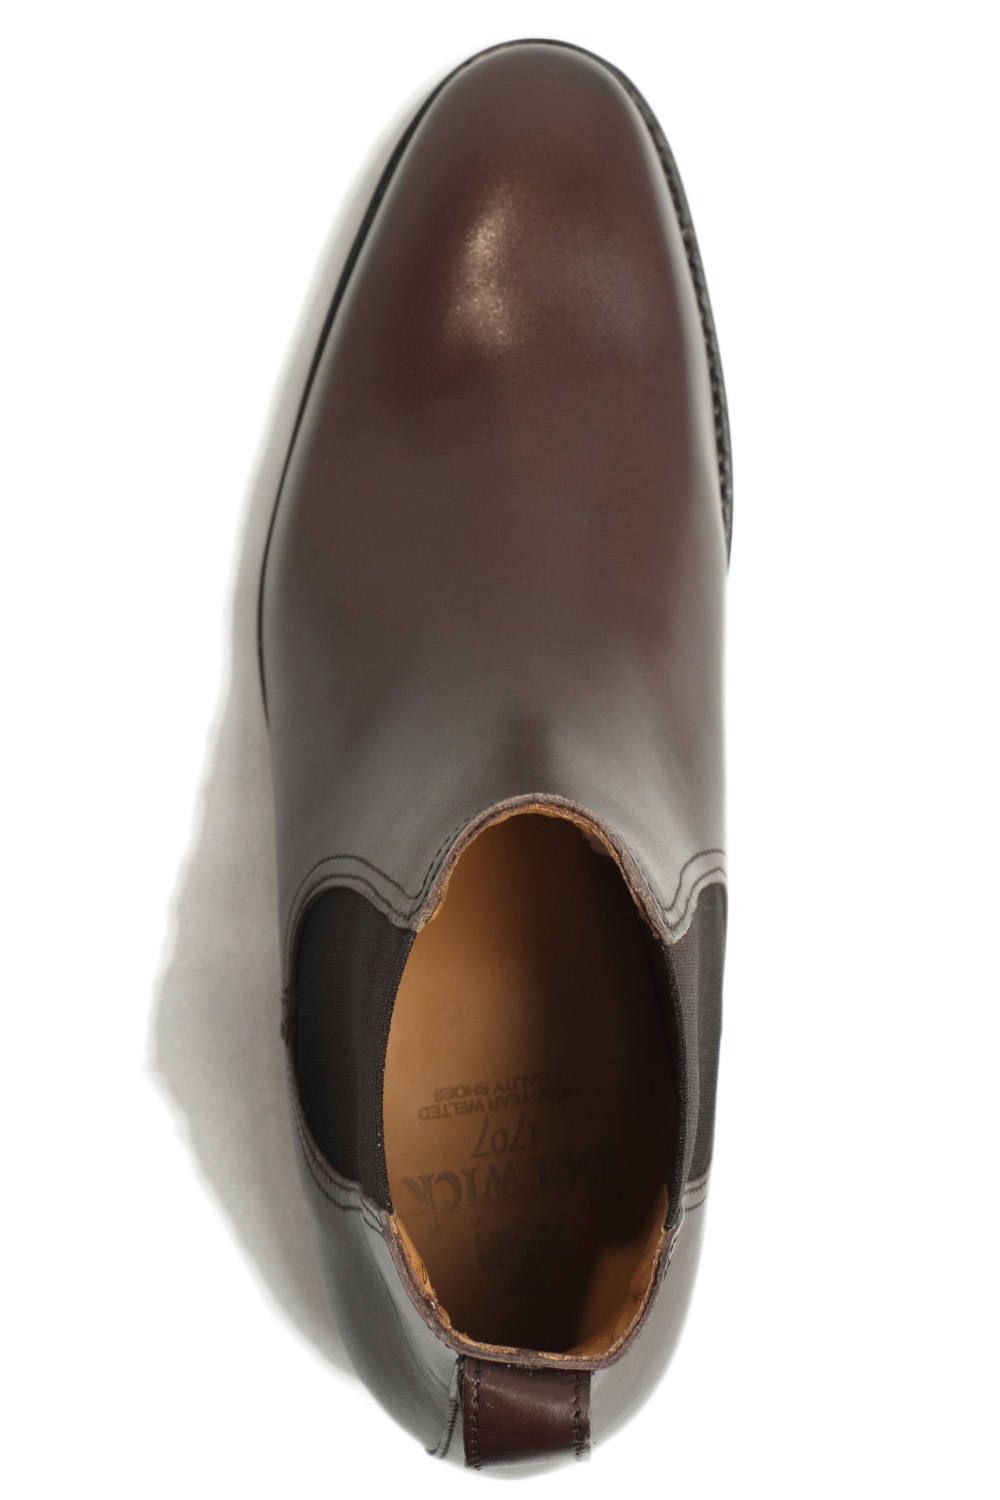 Berwick 1707 - ダイナイトソール ボックスカーフ サイドゴア ブーツ